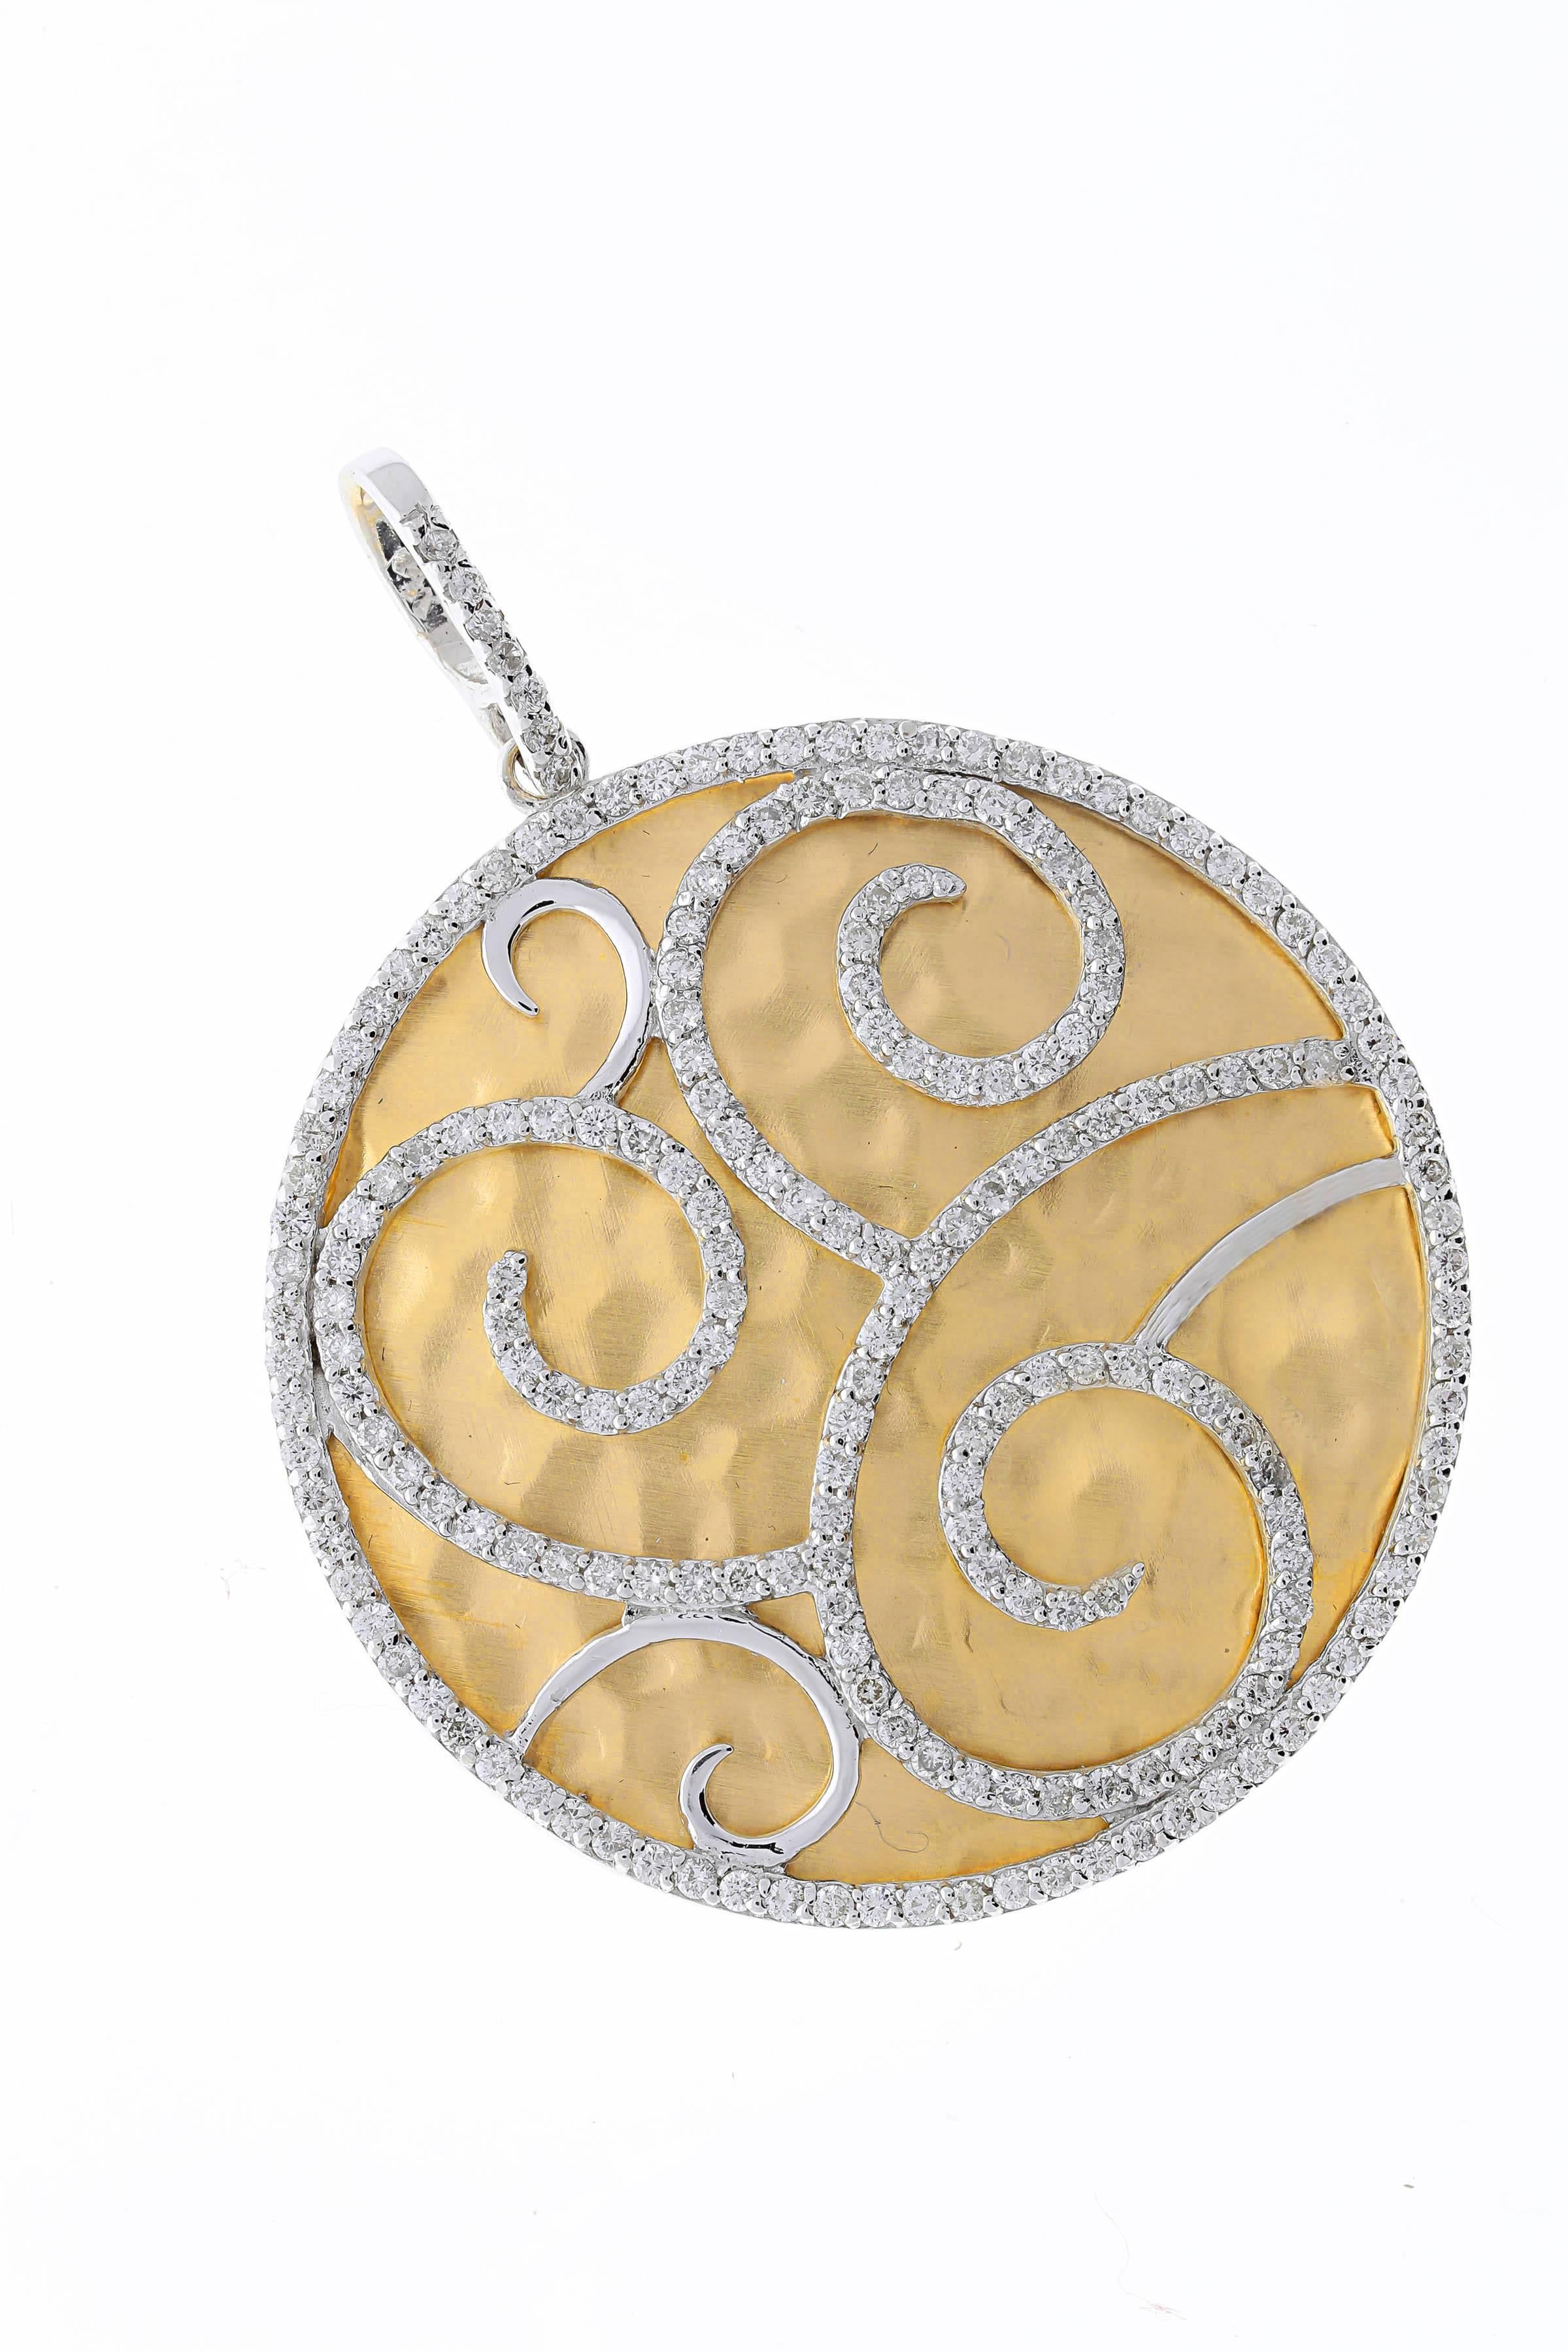 14K round hammered disc pendant with swirl design containing bezel set round diamonds.